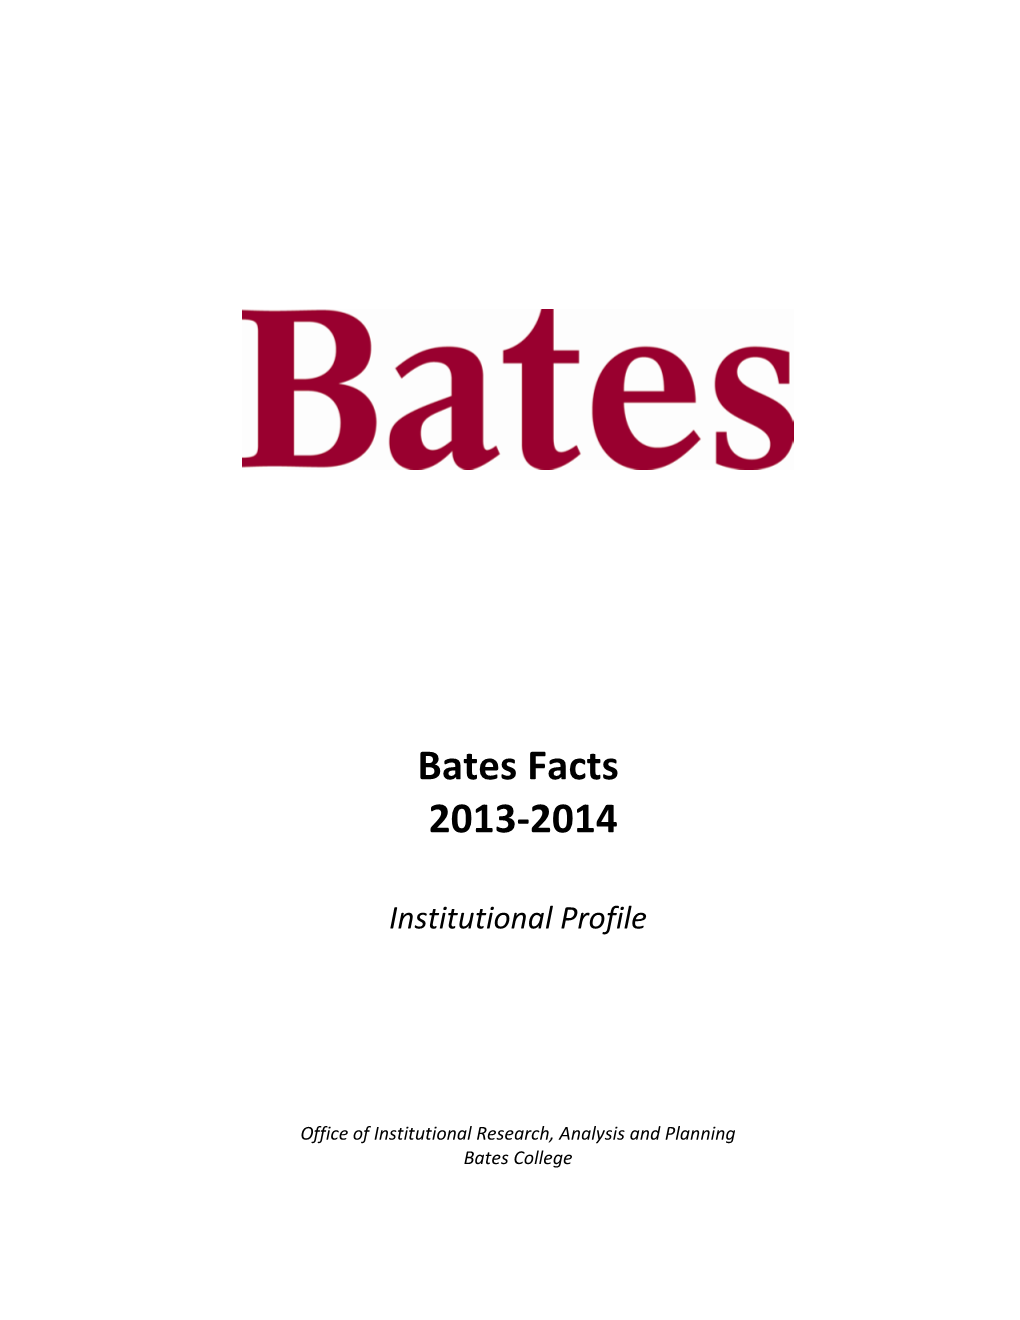 Bates Facts 2013-2014